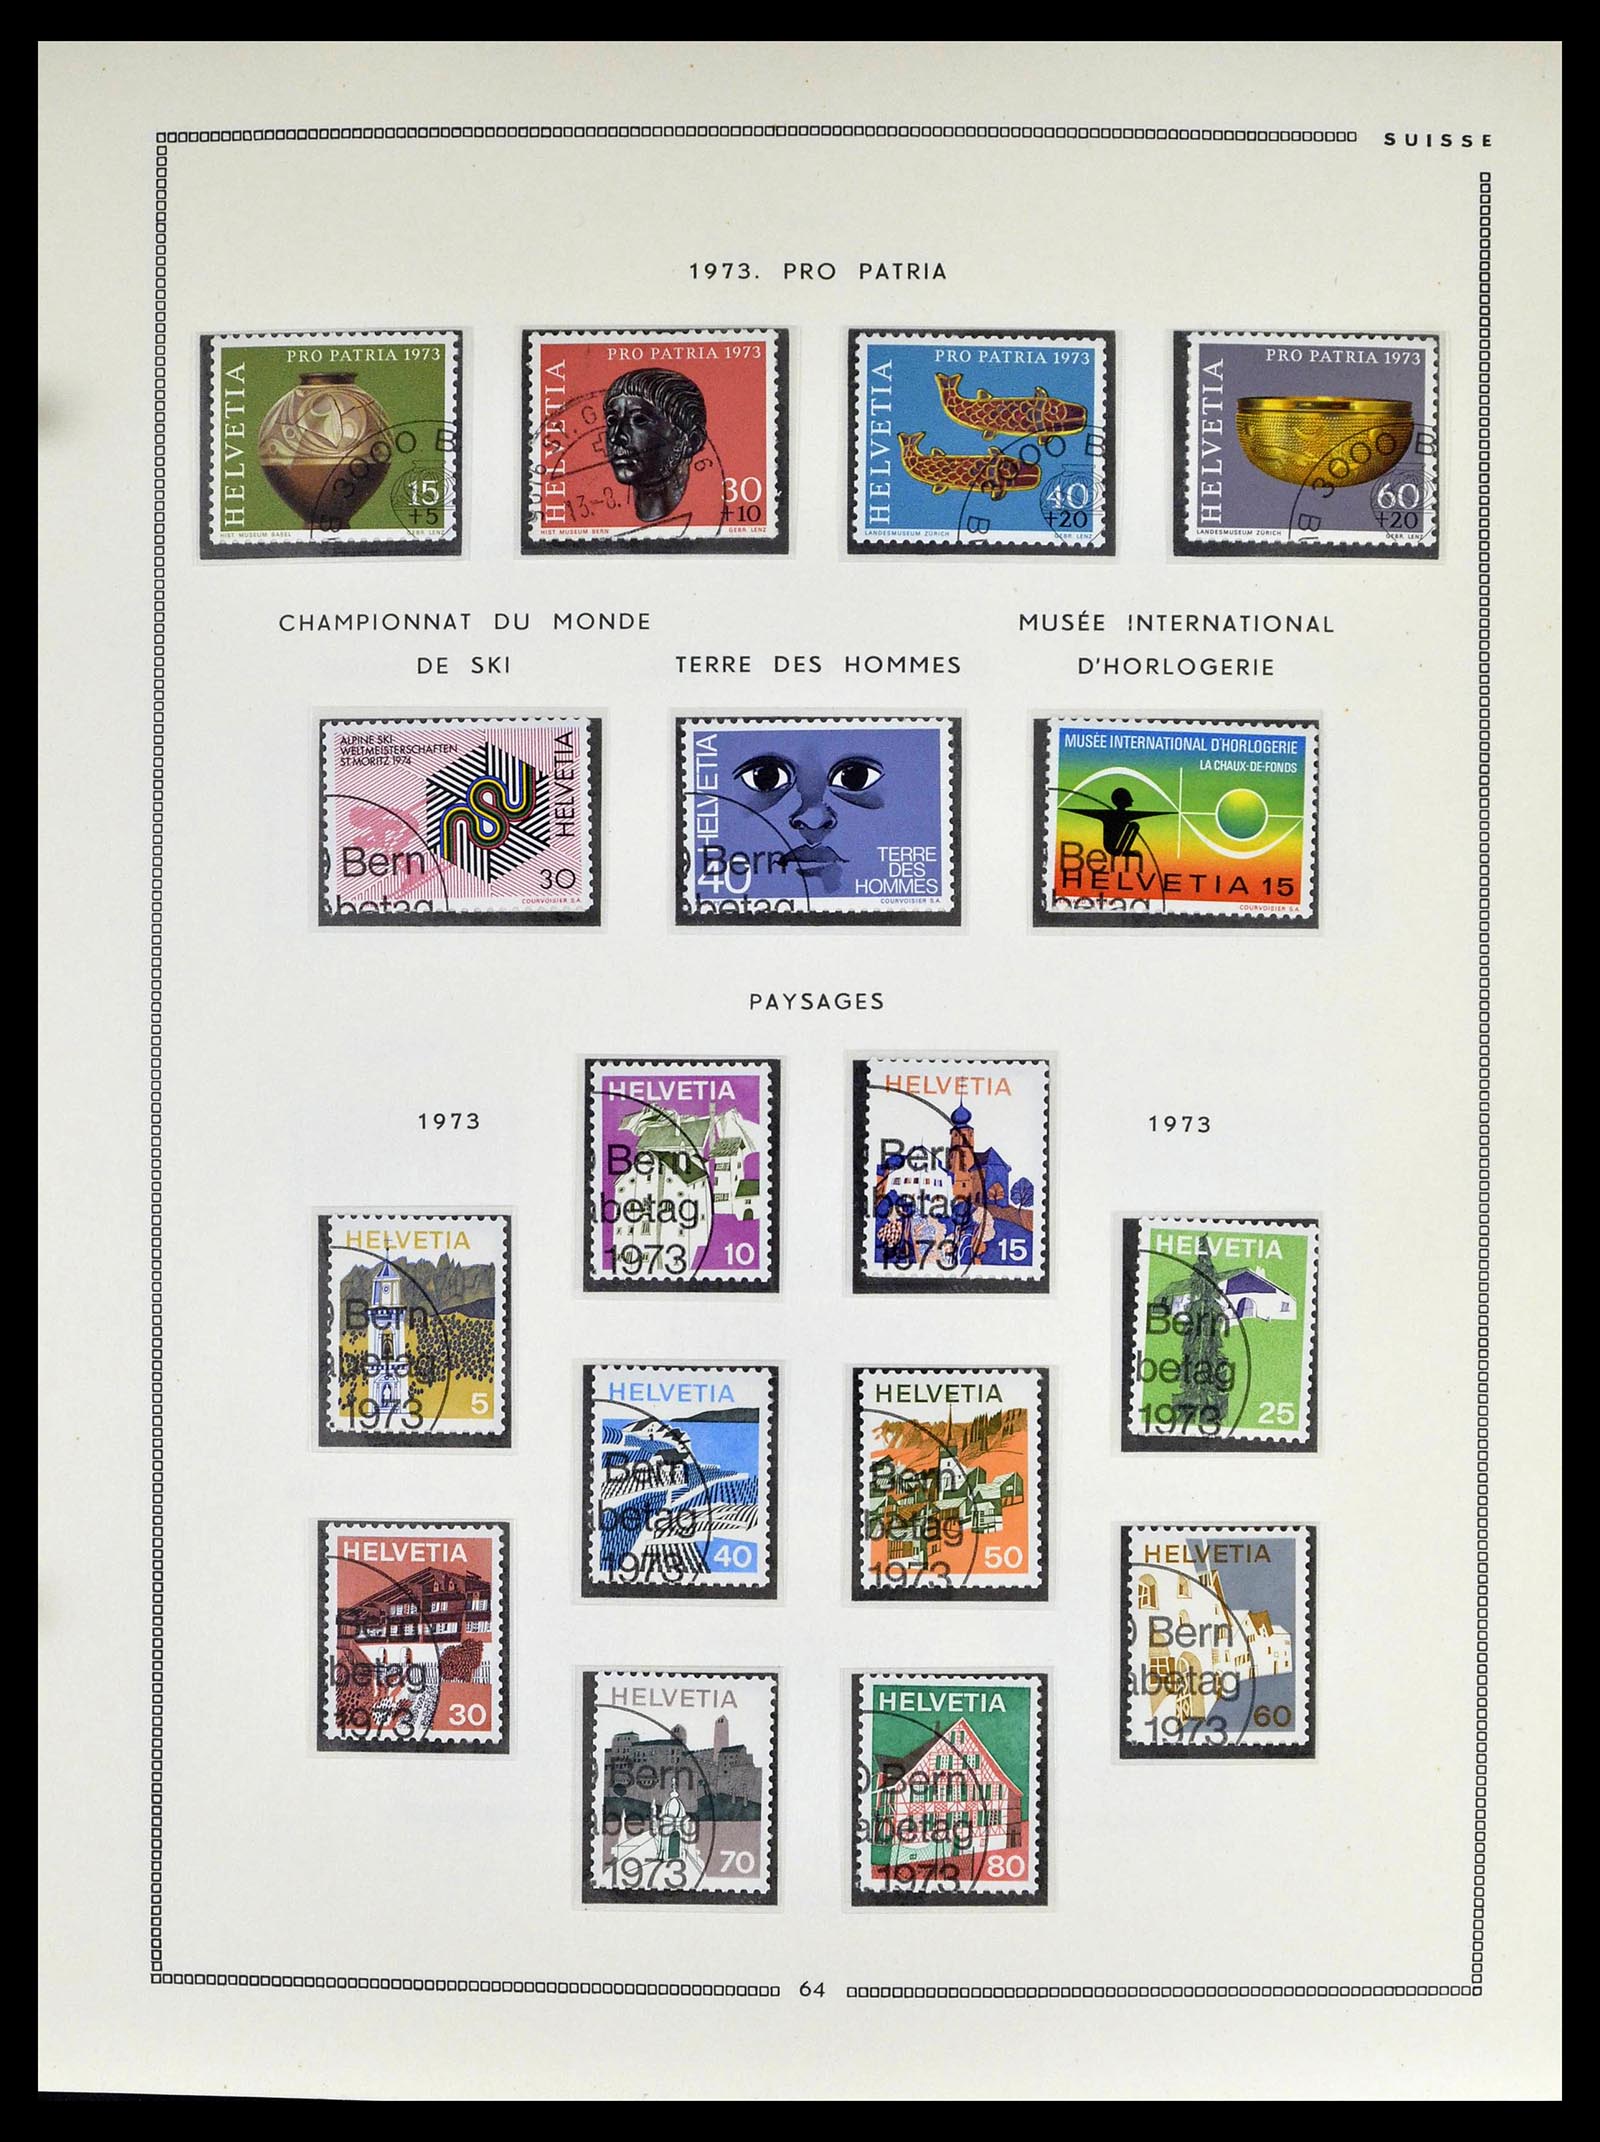 39094 0062 - Stamp collection 39094 Switzerland 1850-2005.